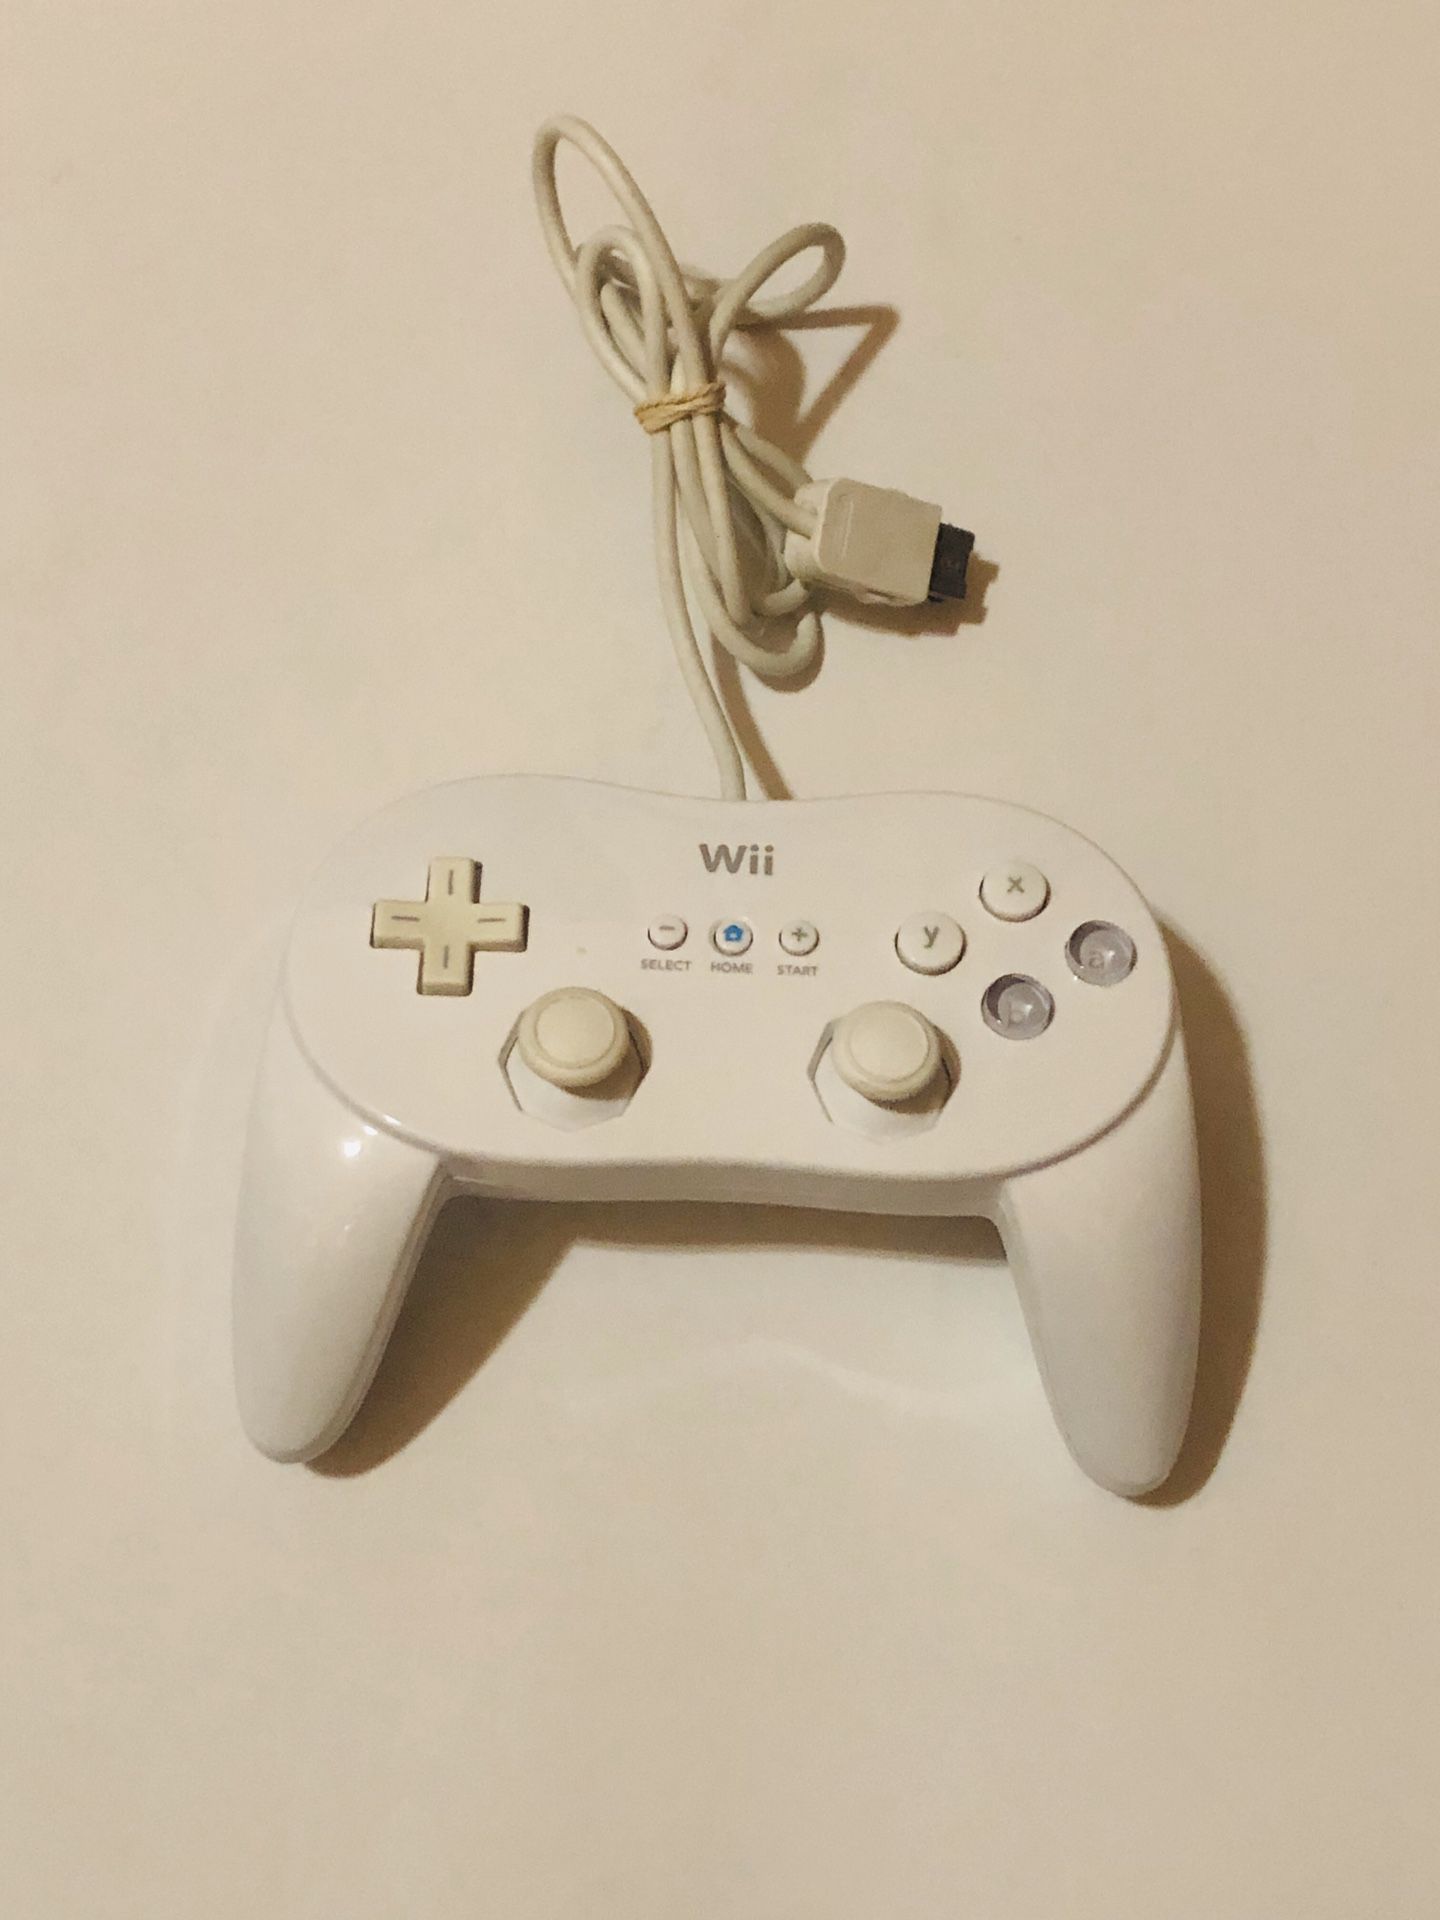 Nintendo Wii pro controller